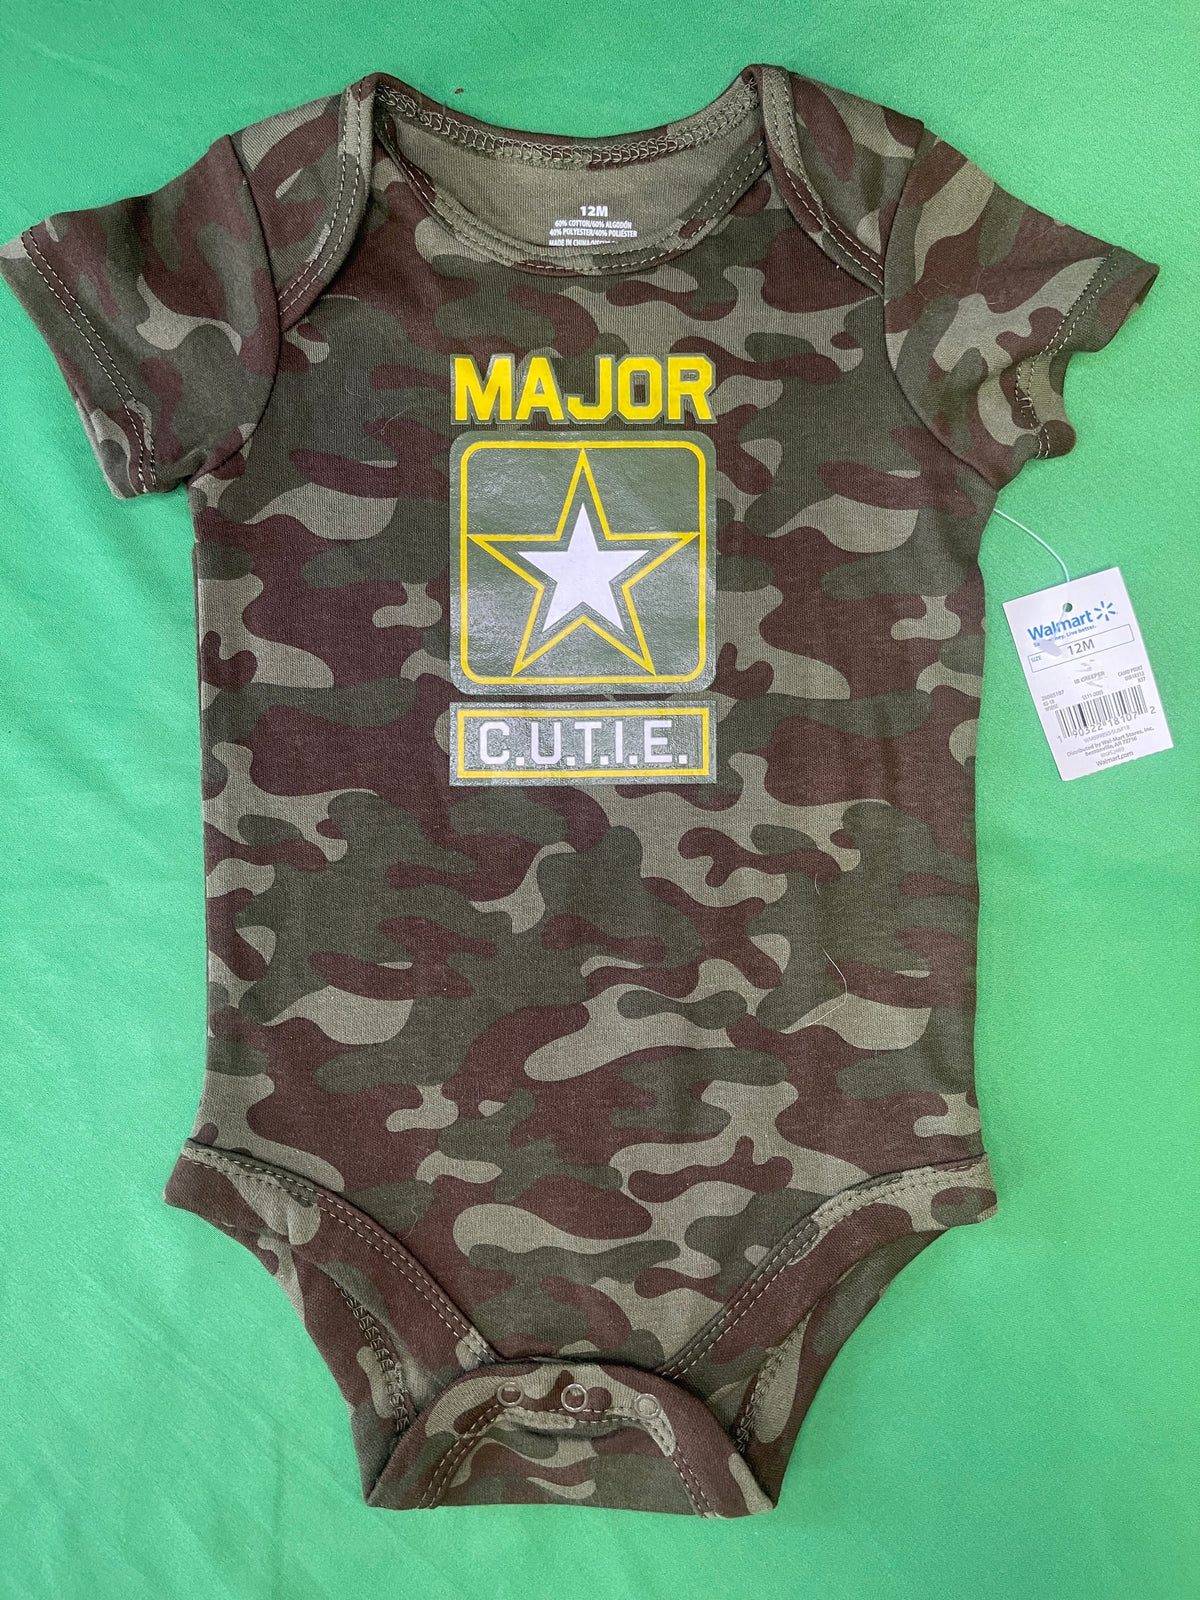 USA Army Major Cutie Camo Bodysuit/Vest 12 months NWT